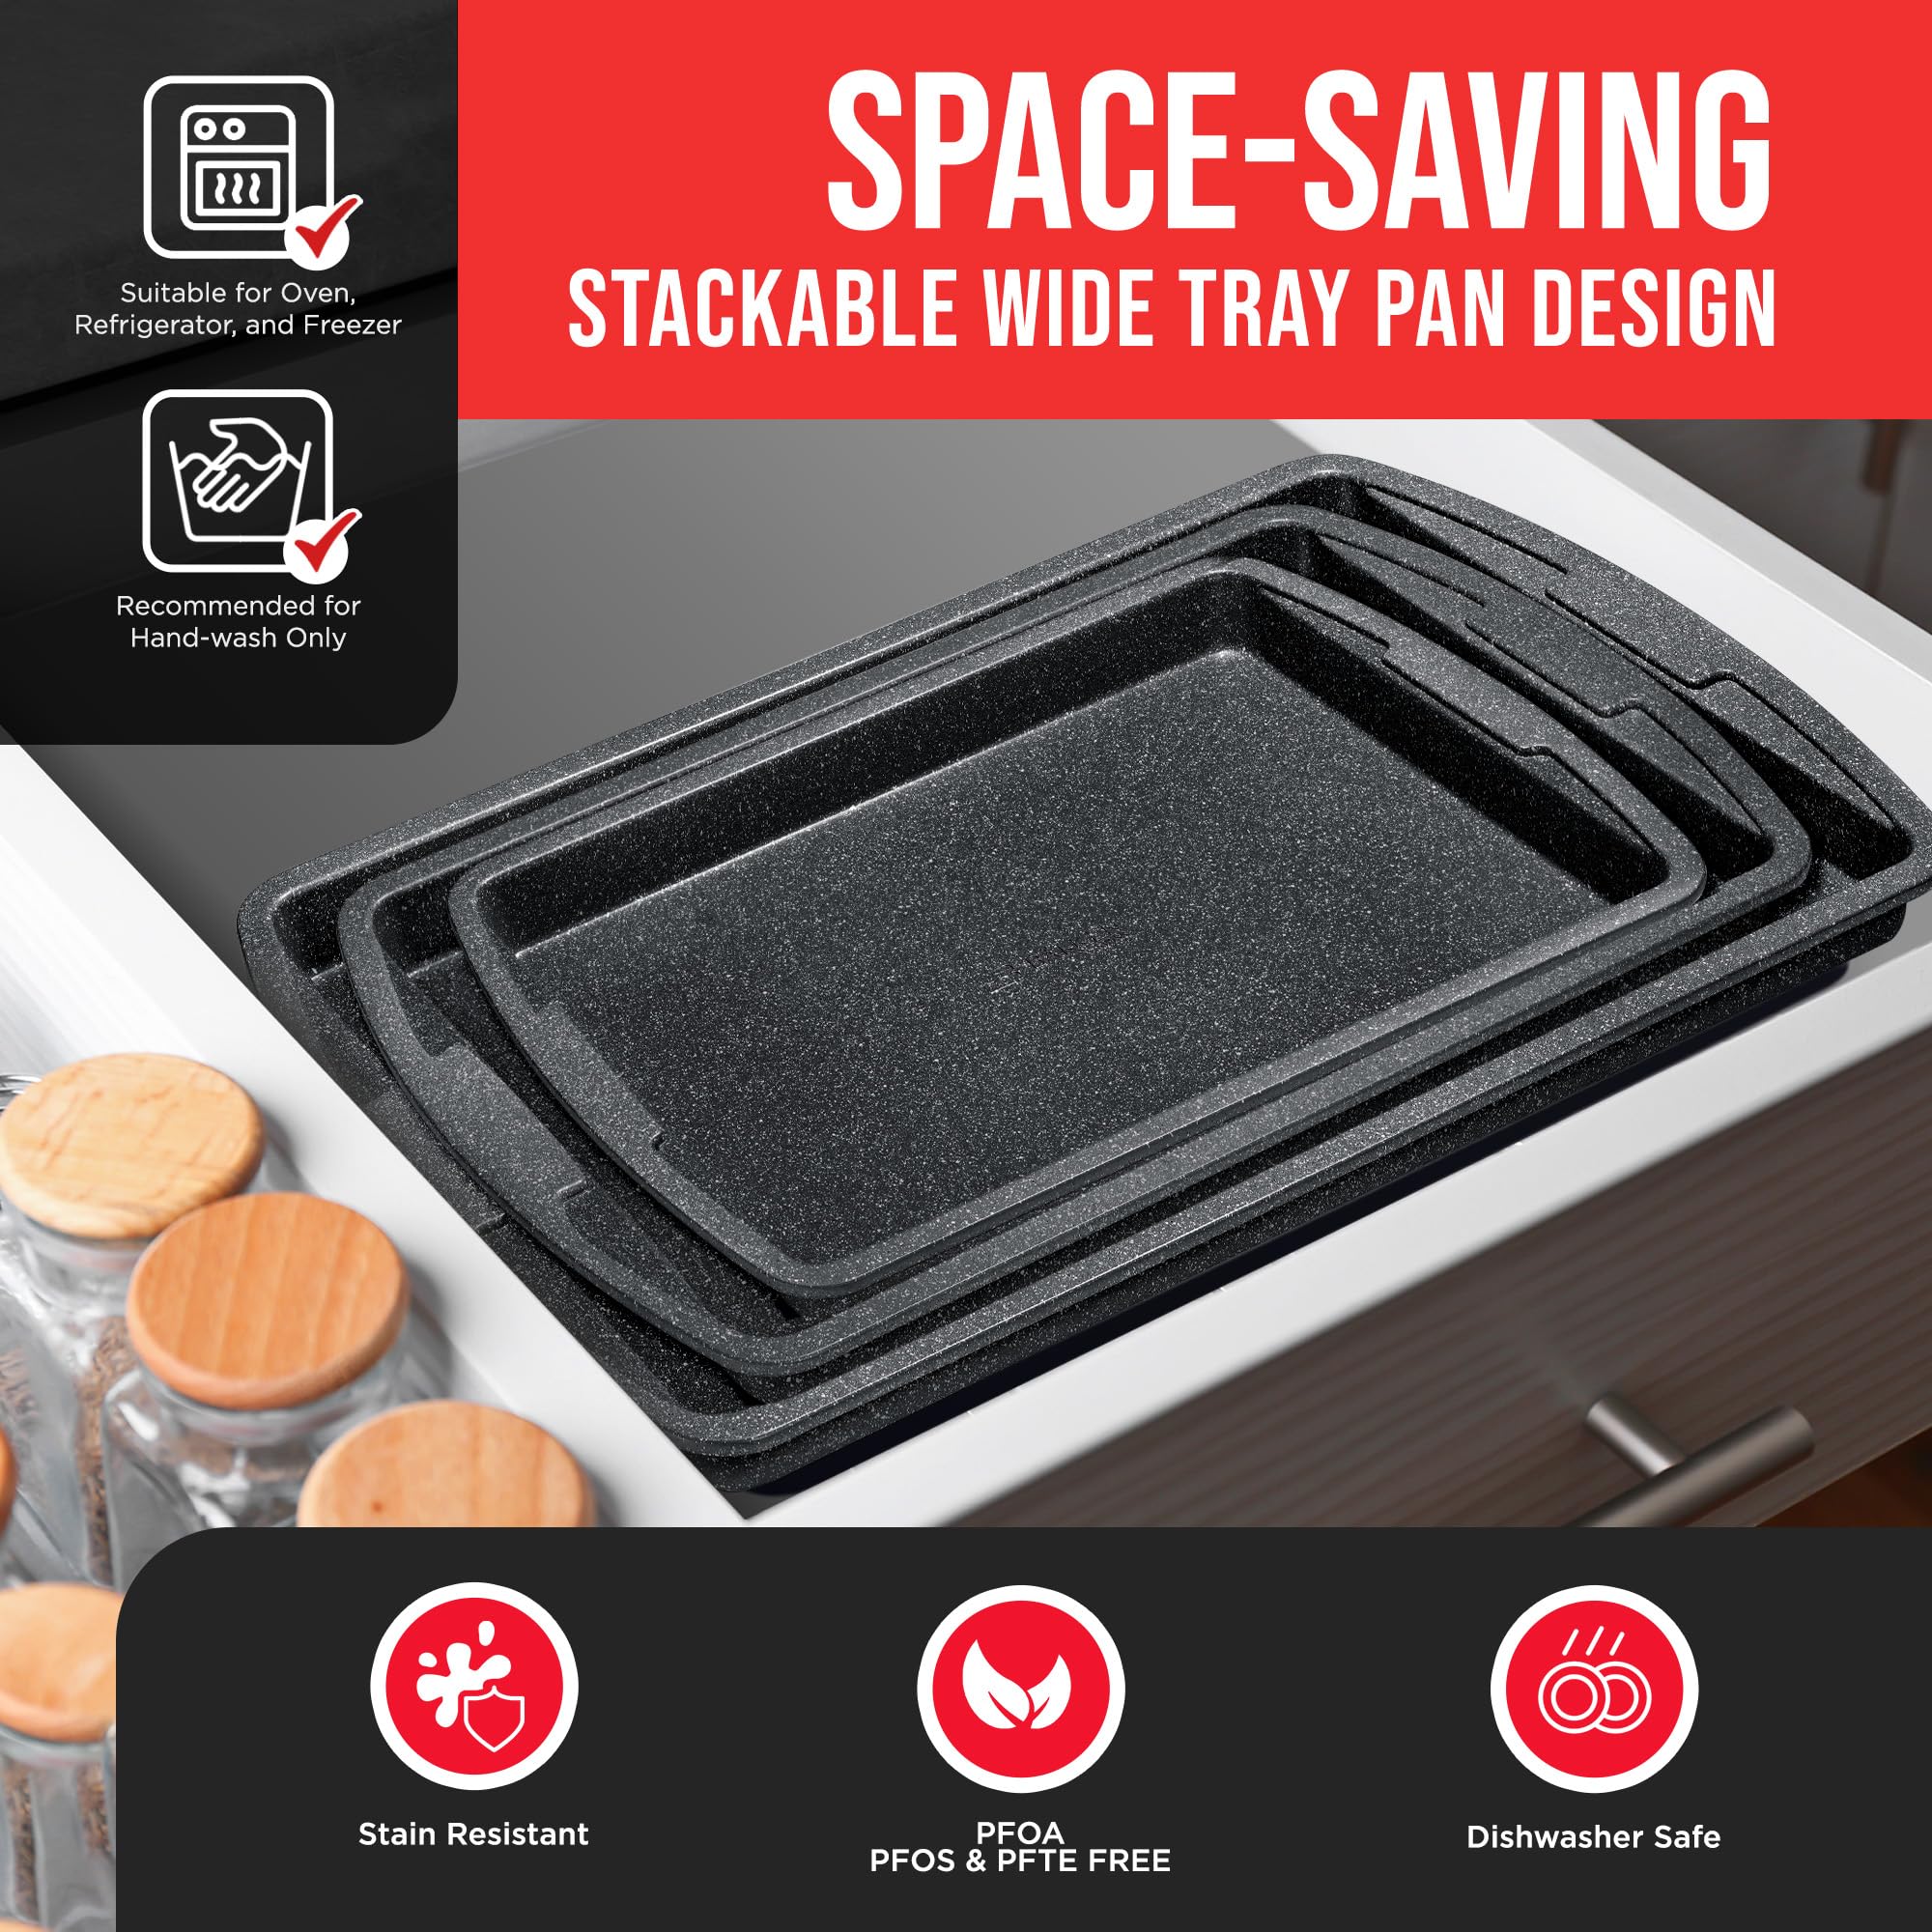 Bakken Swiss Cookie Sheet 3 Piece Set - Non-Stick, Stackable Baking Pans, Gray marble Deluxe Ceramic Coating – Dishwasher Safe - for Home Baking